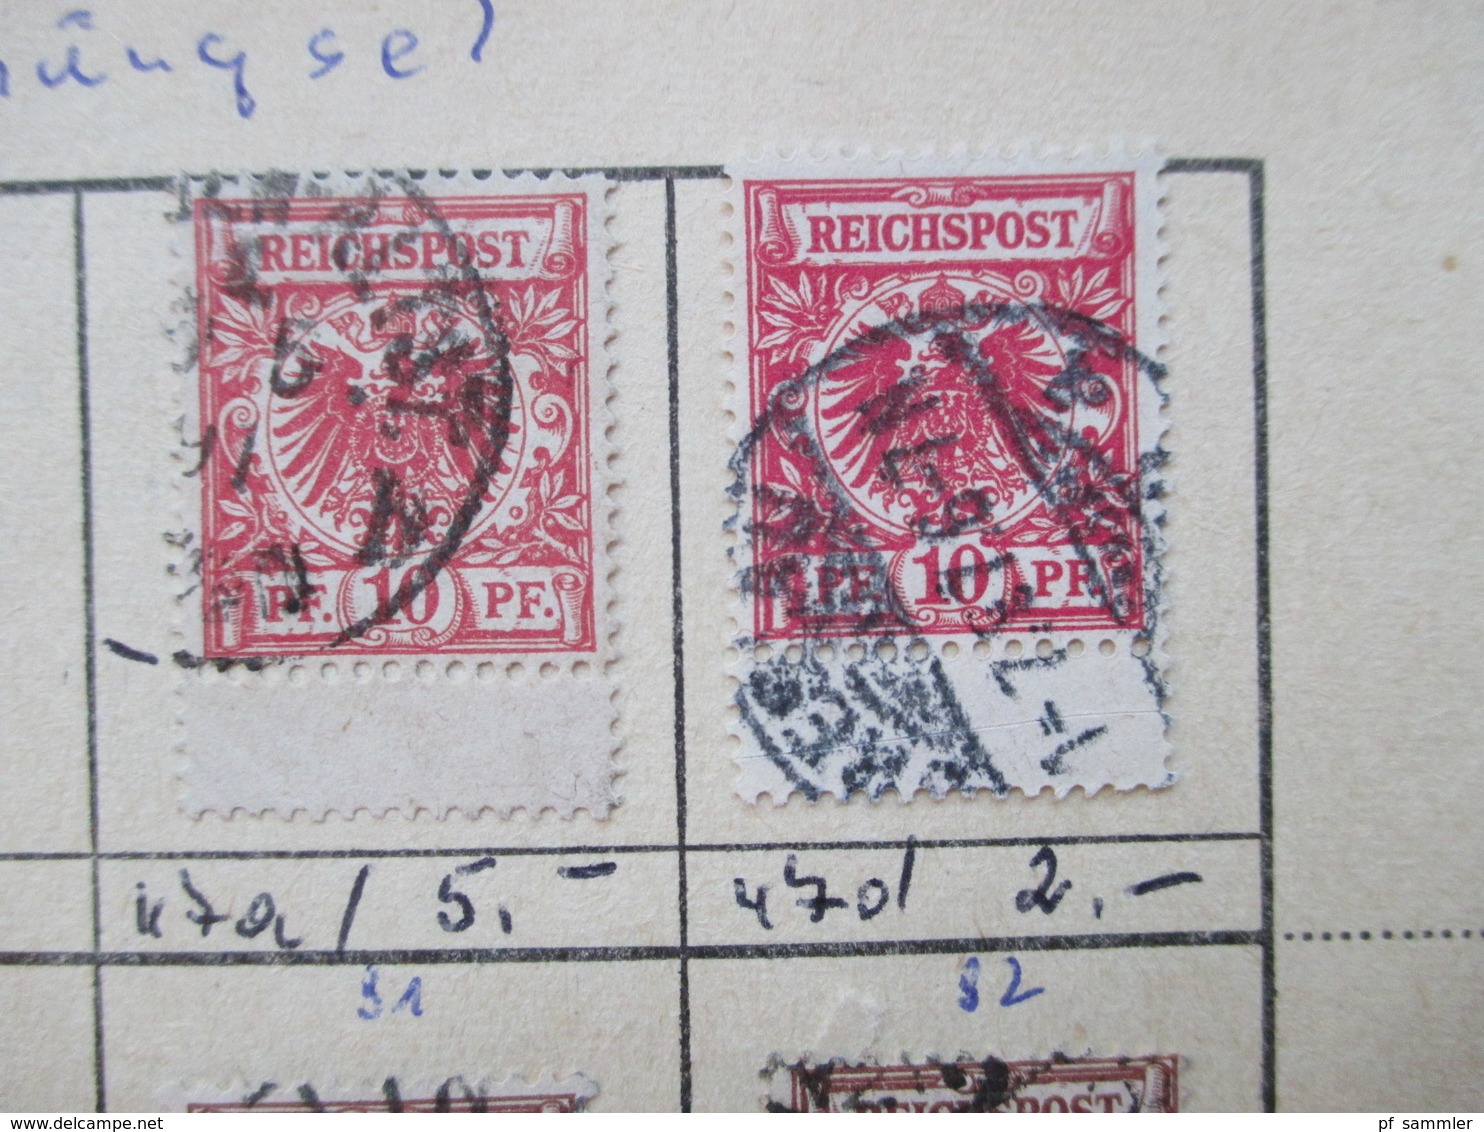 DR altes Auswahlheft ab Krone / Adler - 1915 gestempelt. Farben / saubere Stempel / senkr. Paare / 89 / 91 Iy usw...